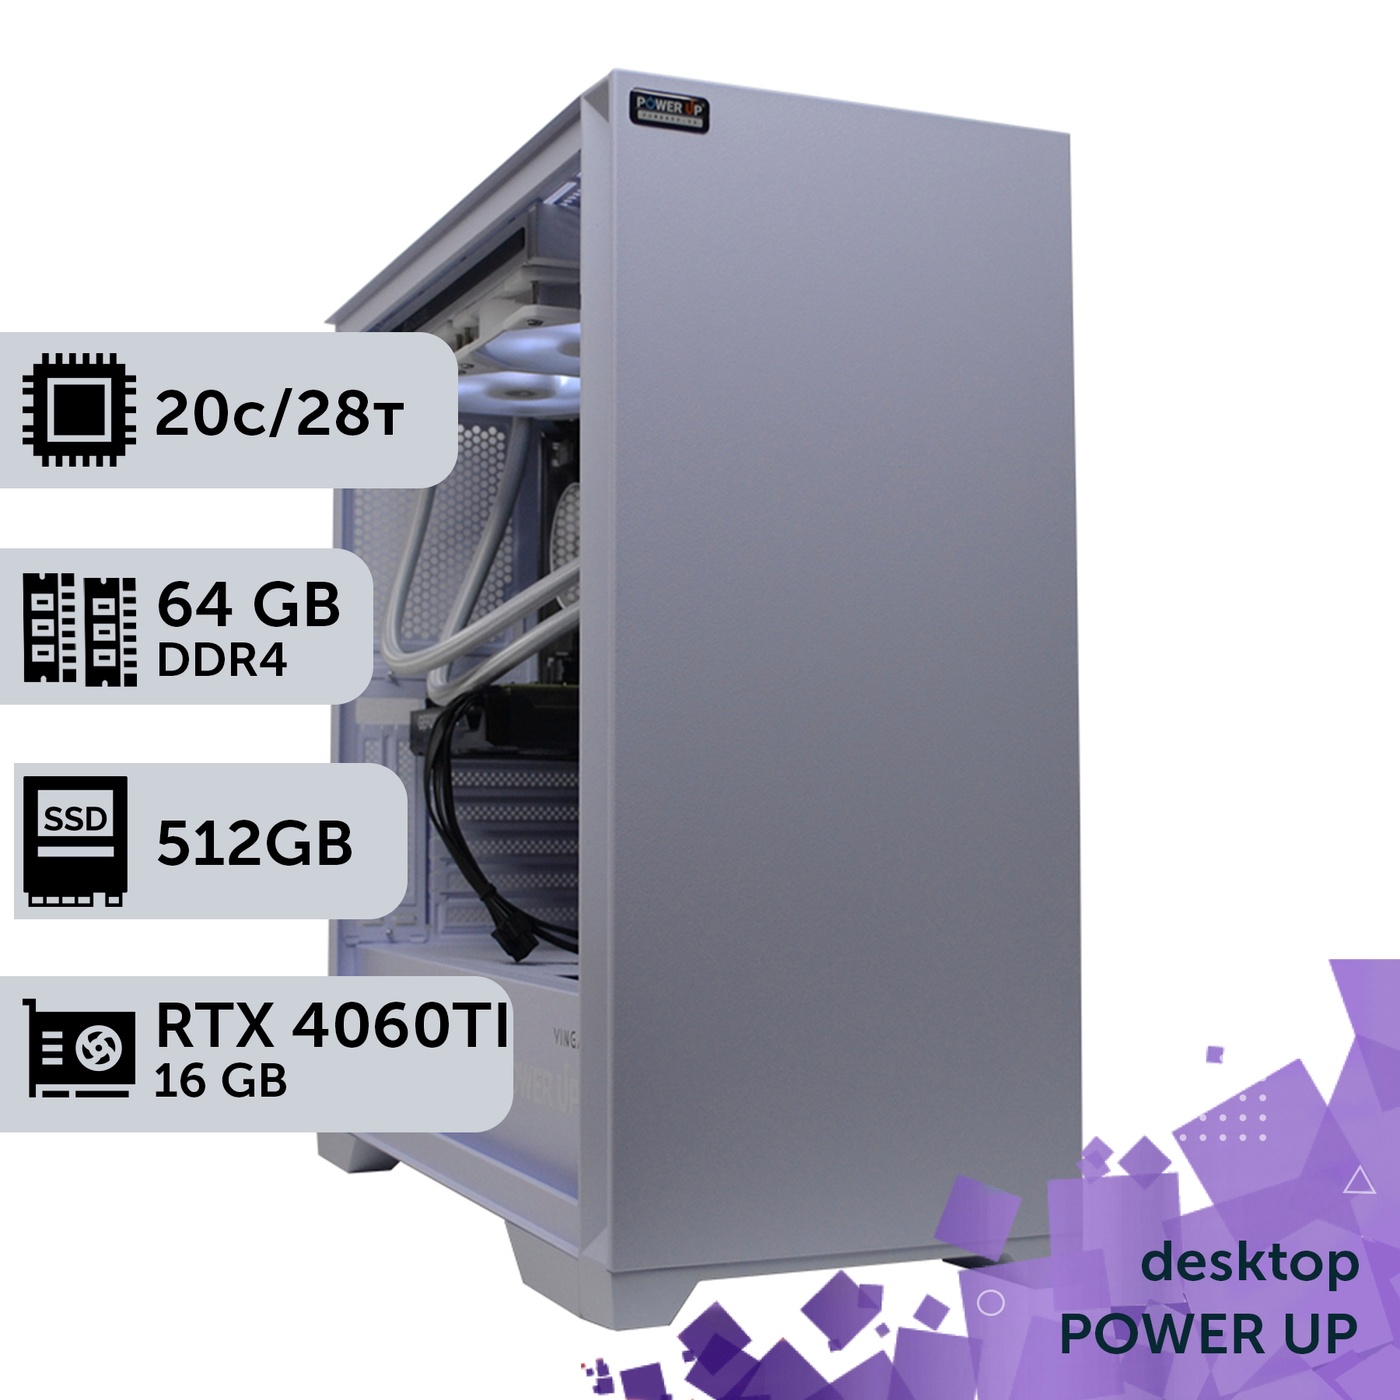 Рабочая станция PowerUp Desktop #317 Core i7 14700K/64 GB/HDD 1 TB/SSD 512GB/GeForce RTX 4060Ti 16GB